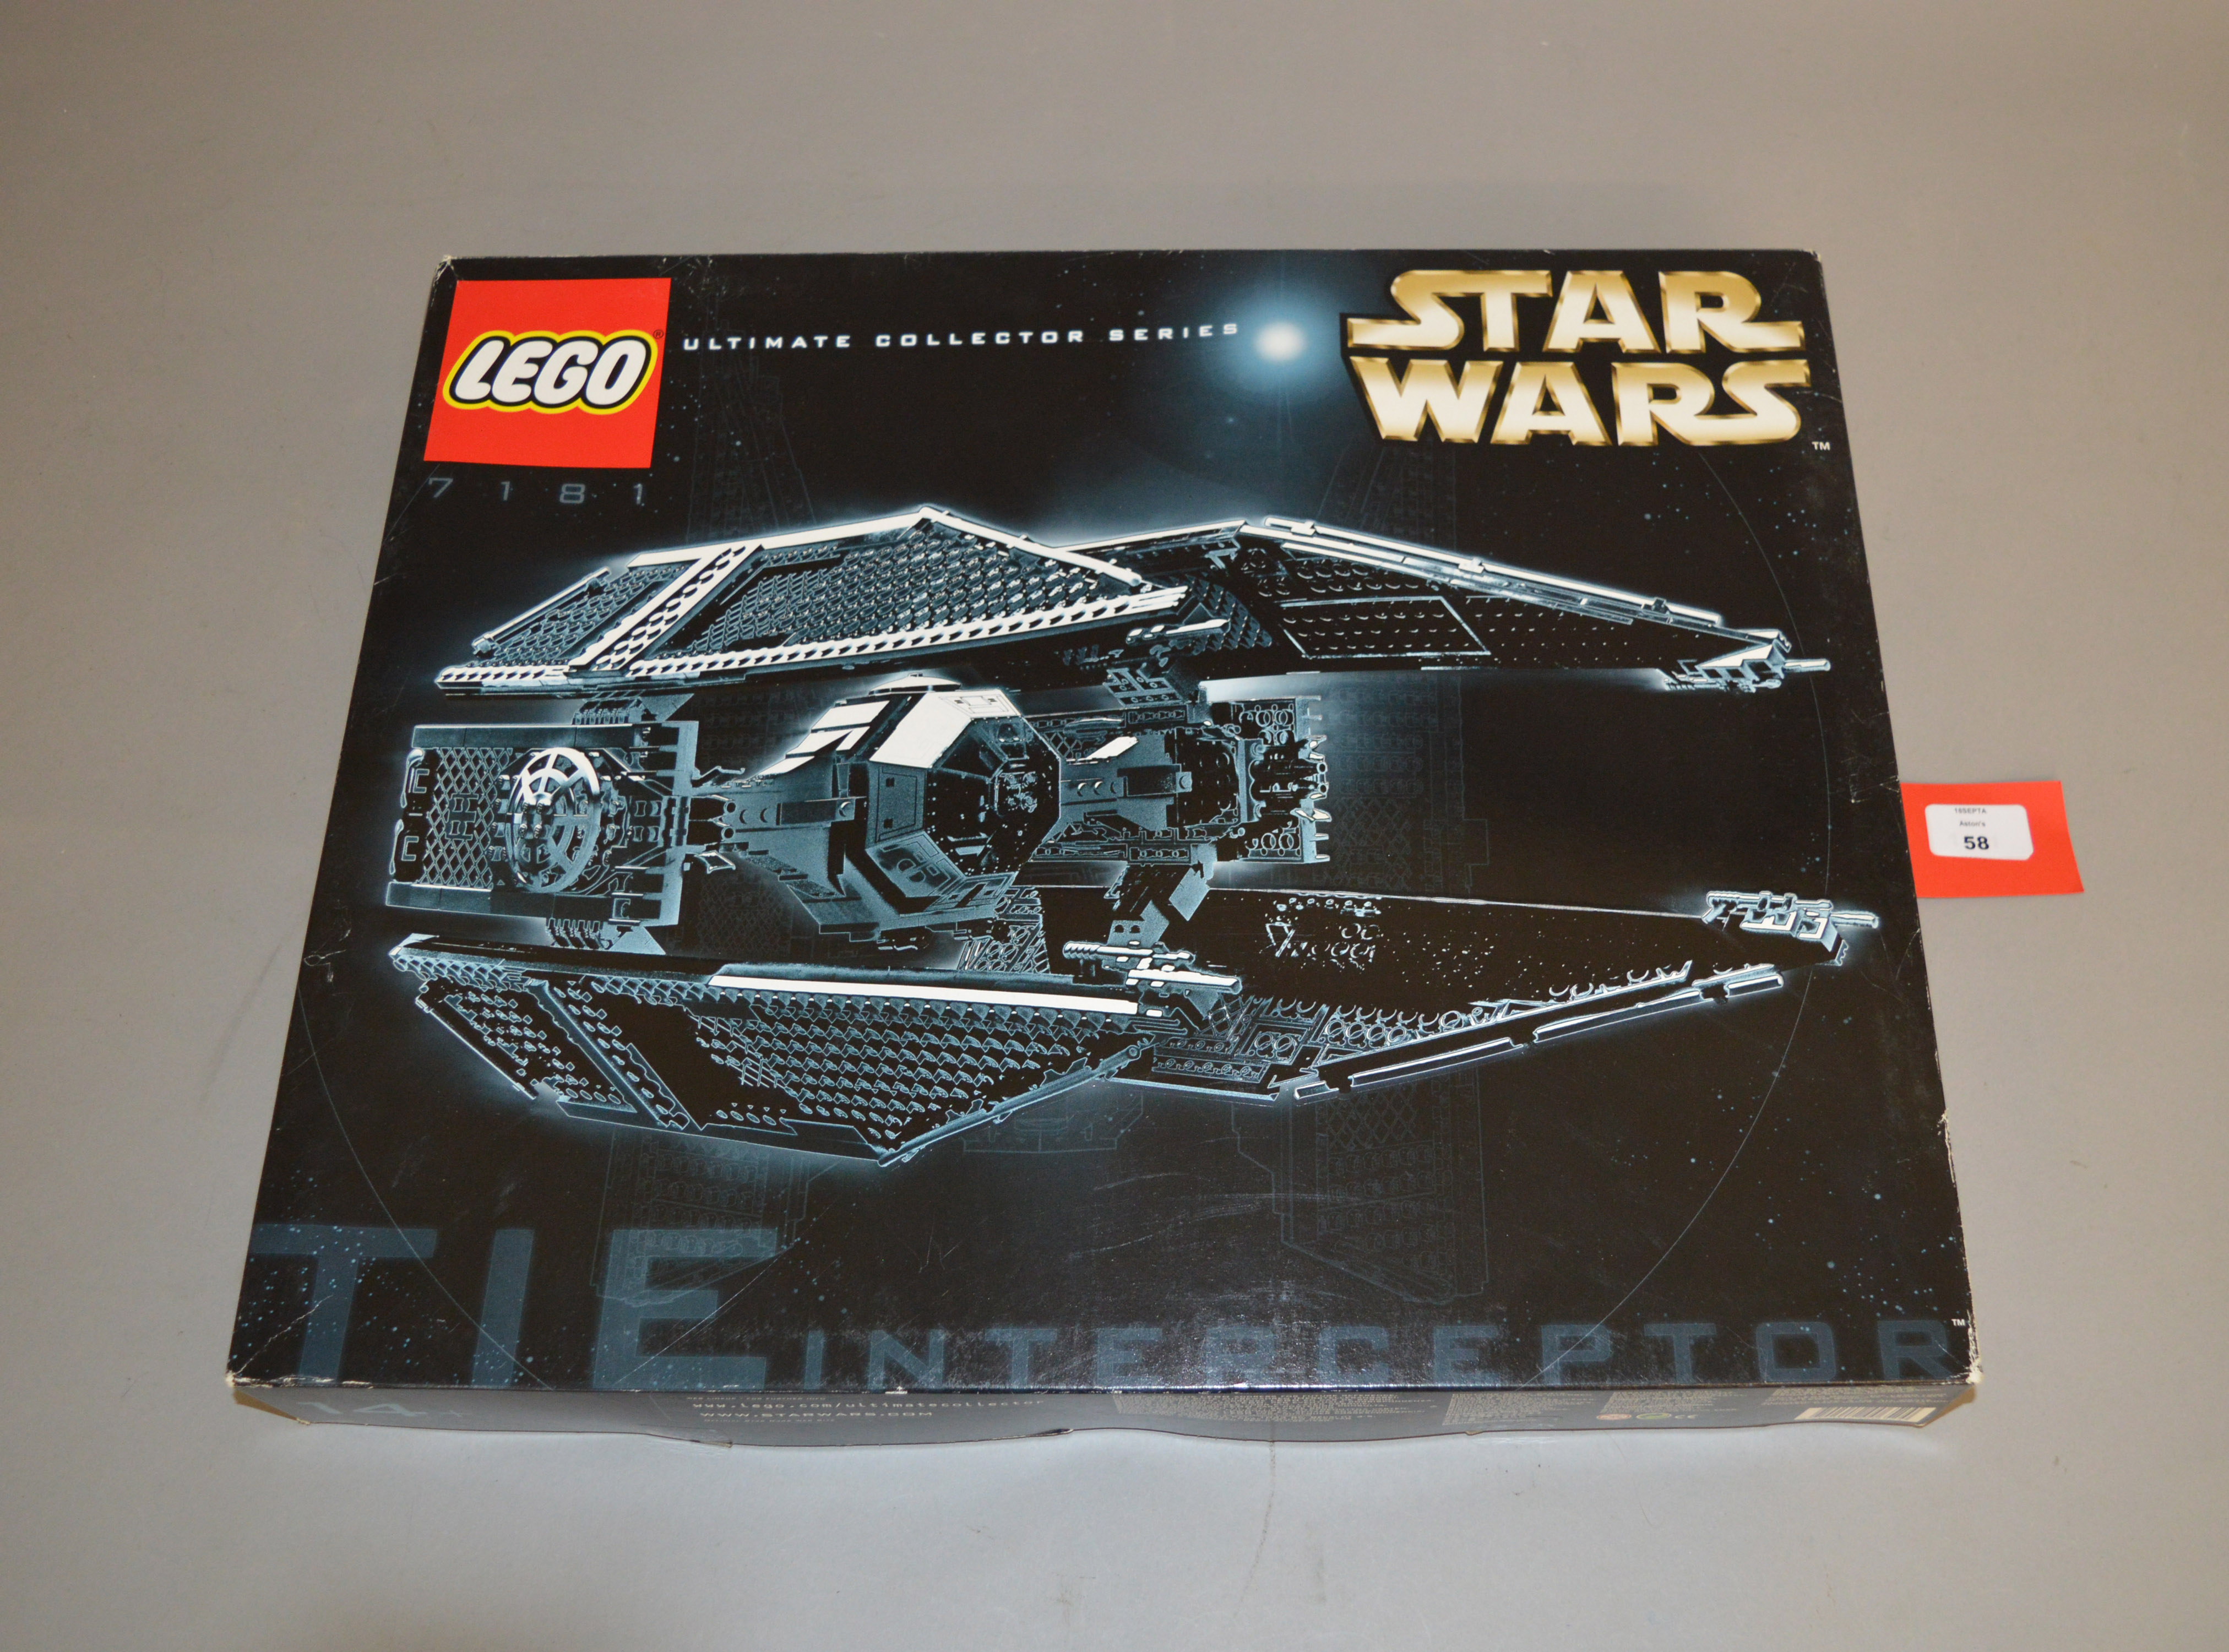 Lego Star Wars 7181 'TIE Interceptor', in generally G box with some undulation and scuffs.